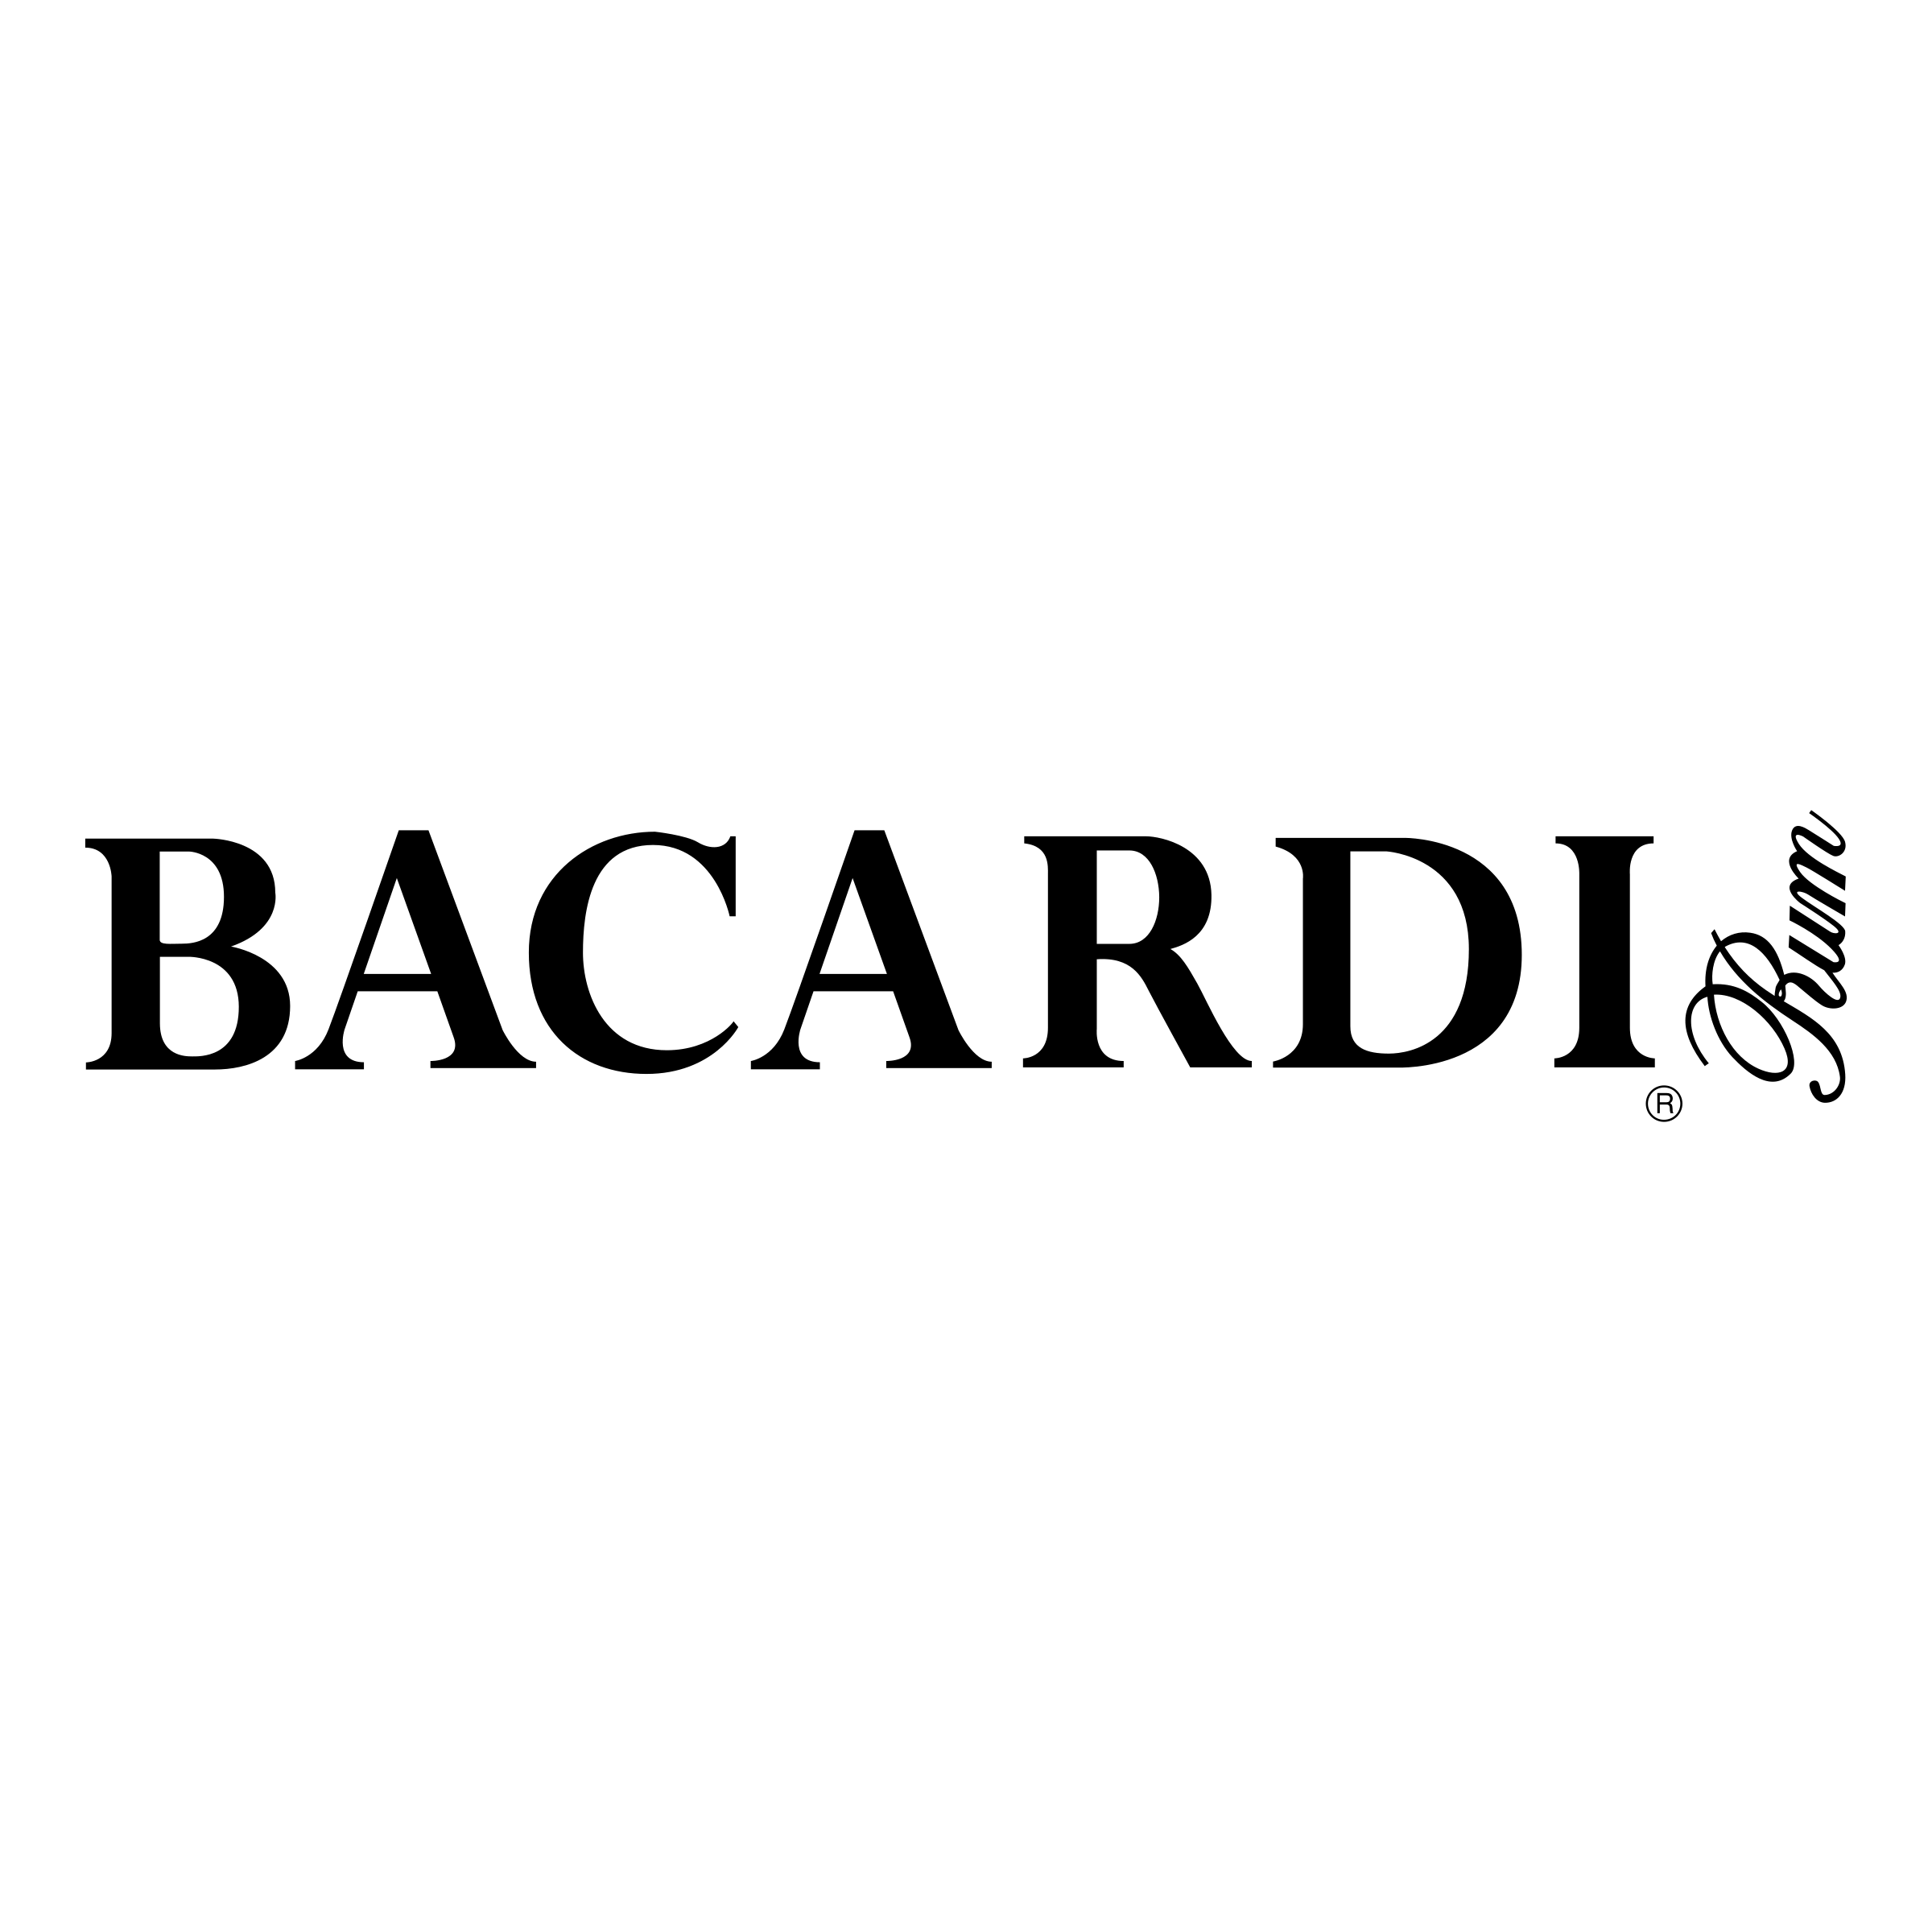 Bacardi Rum Logo - Bacardi Rum Logo PNG Transparent & SVG Vector - Freebie Supply